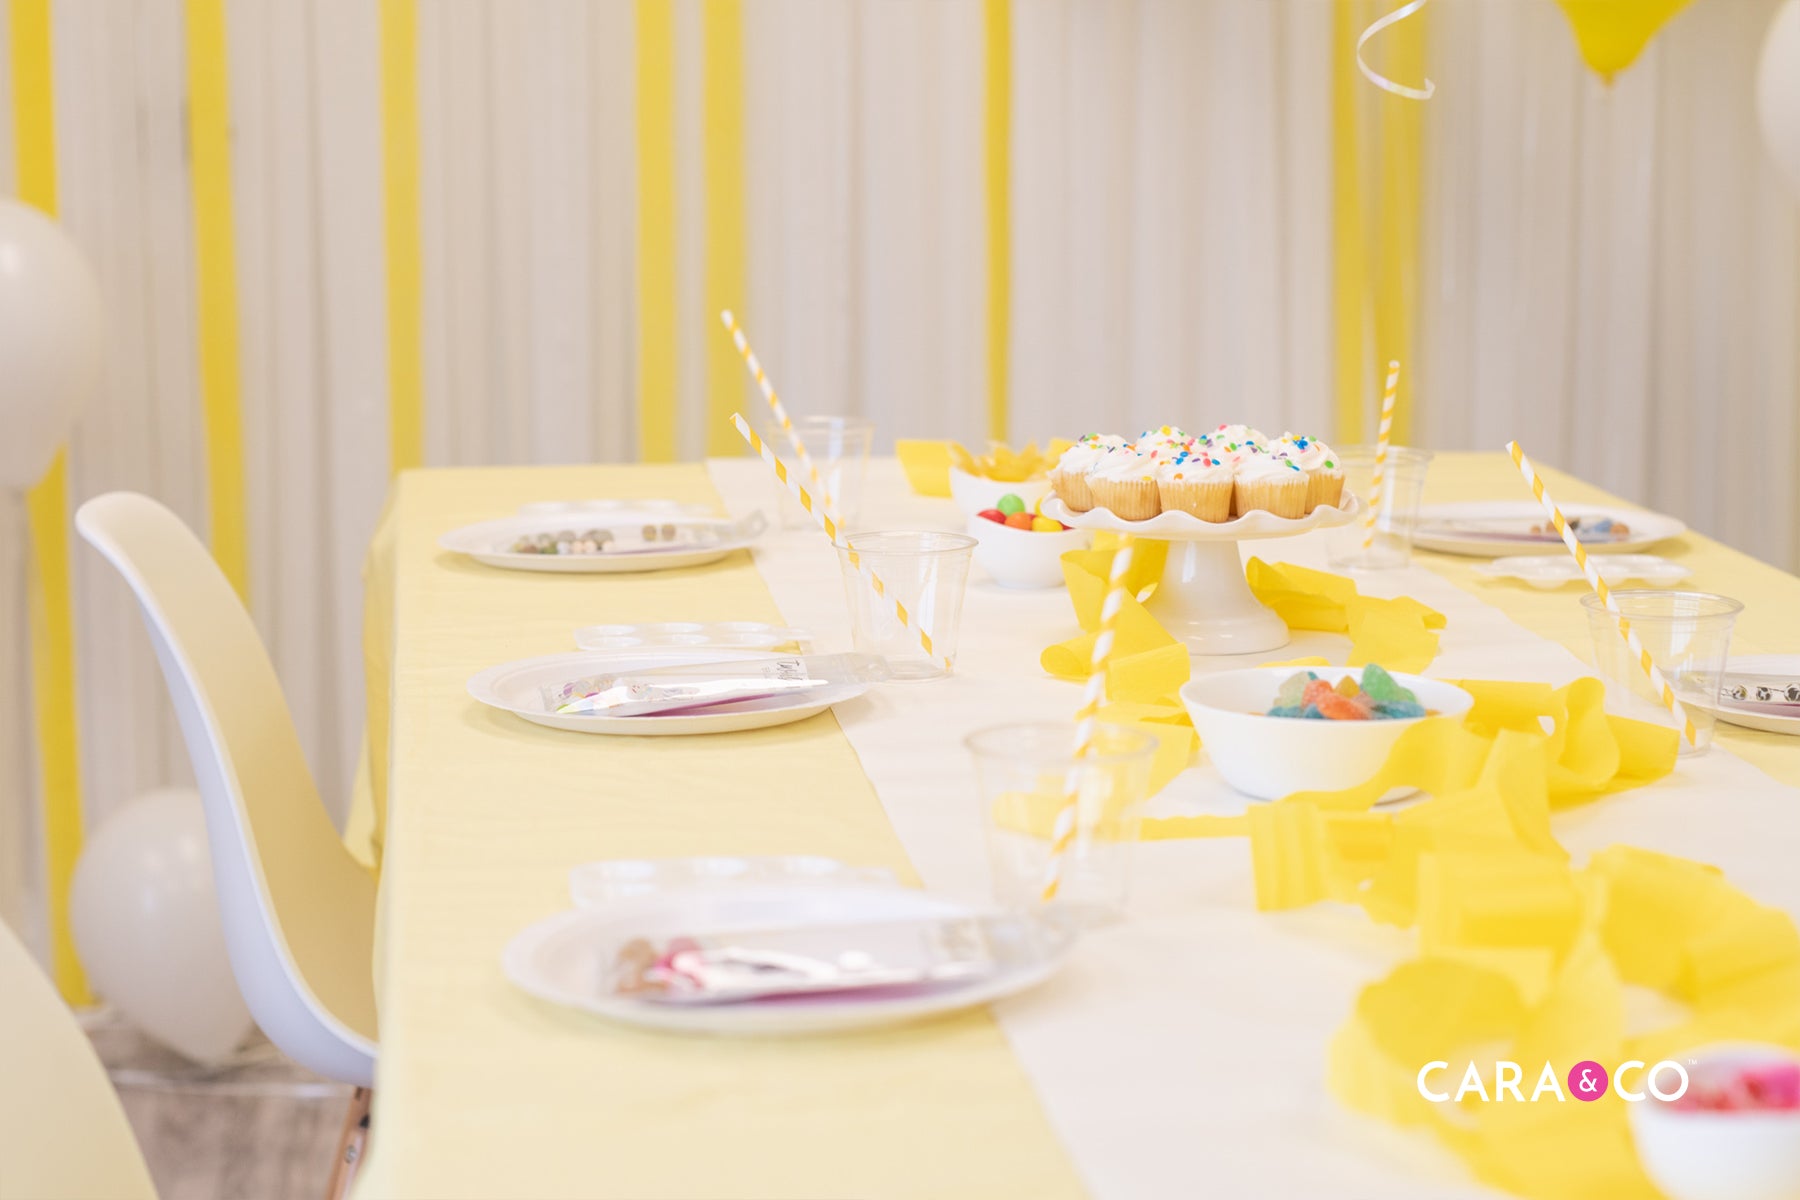 Birthday Party Inspiration - Cara & Co